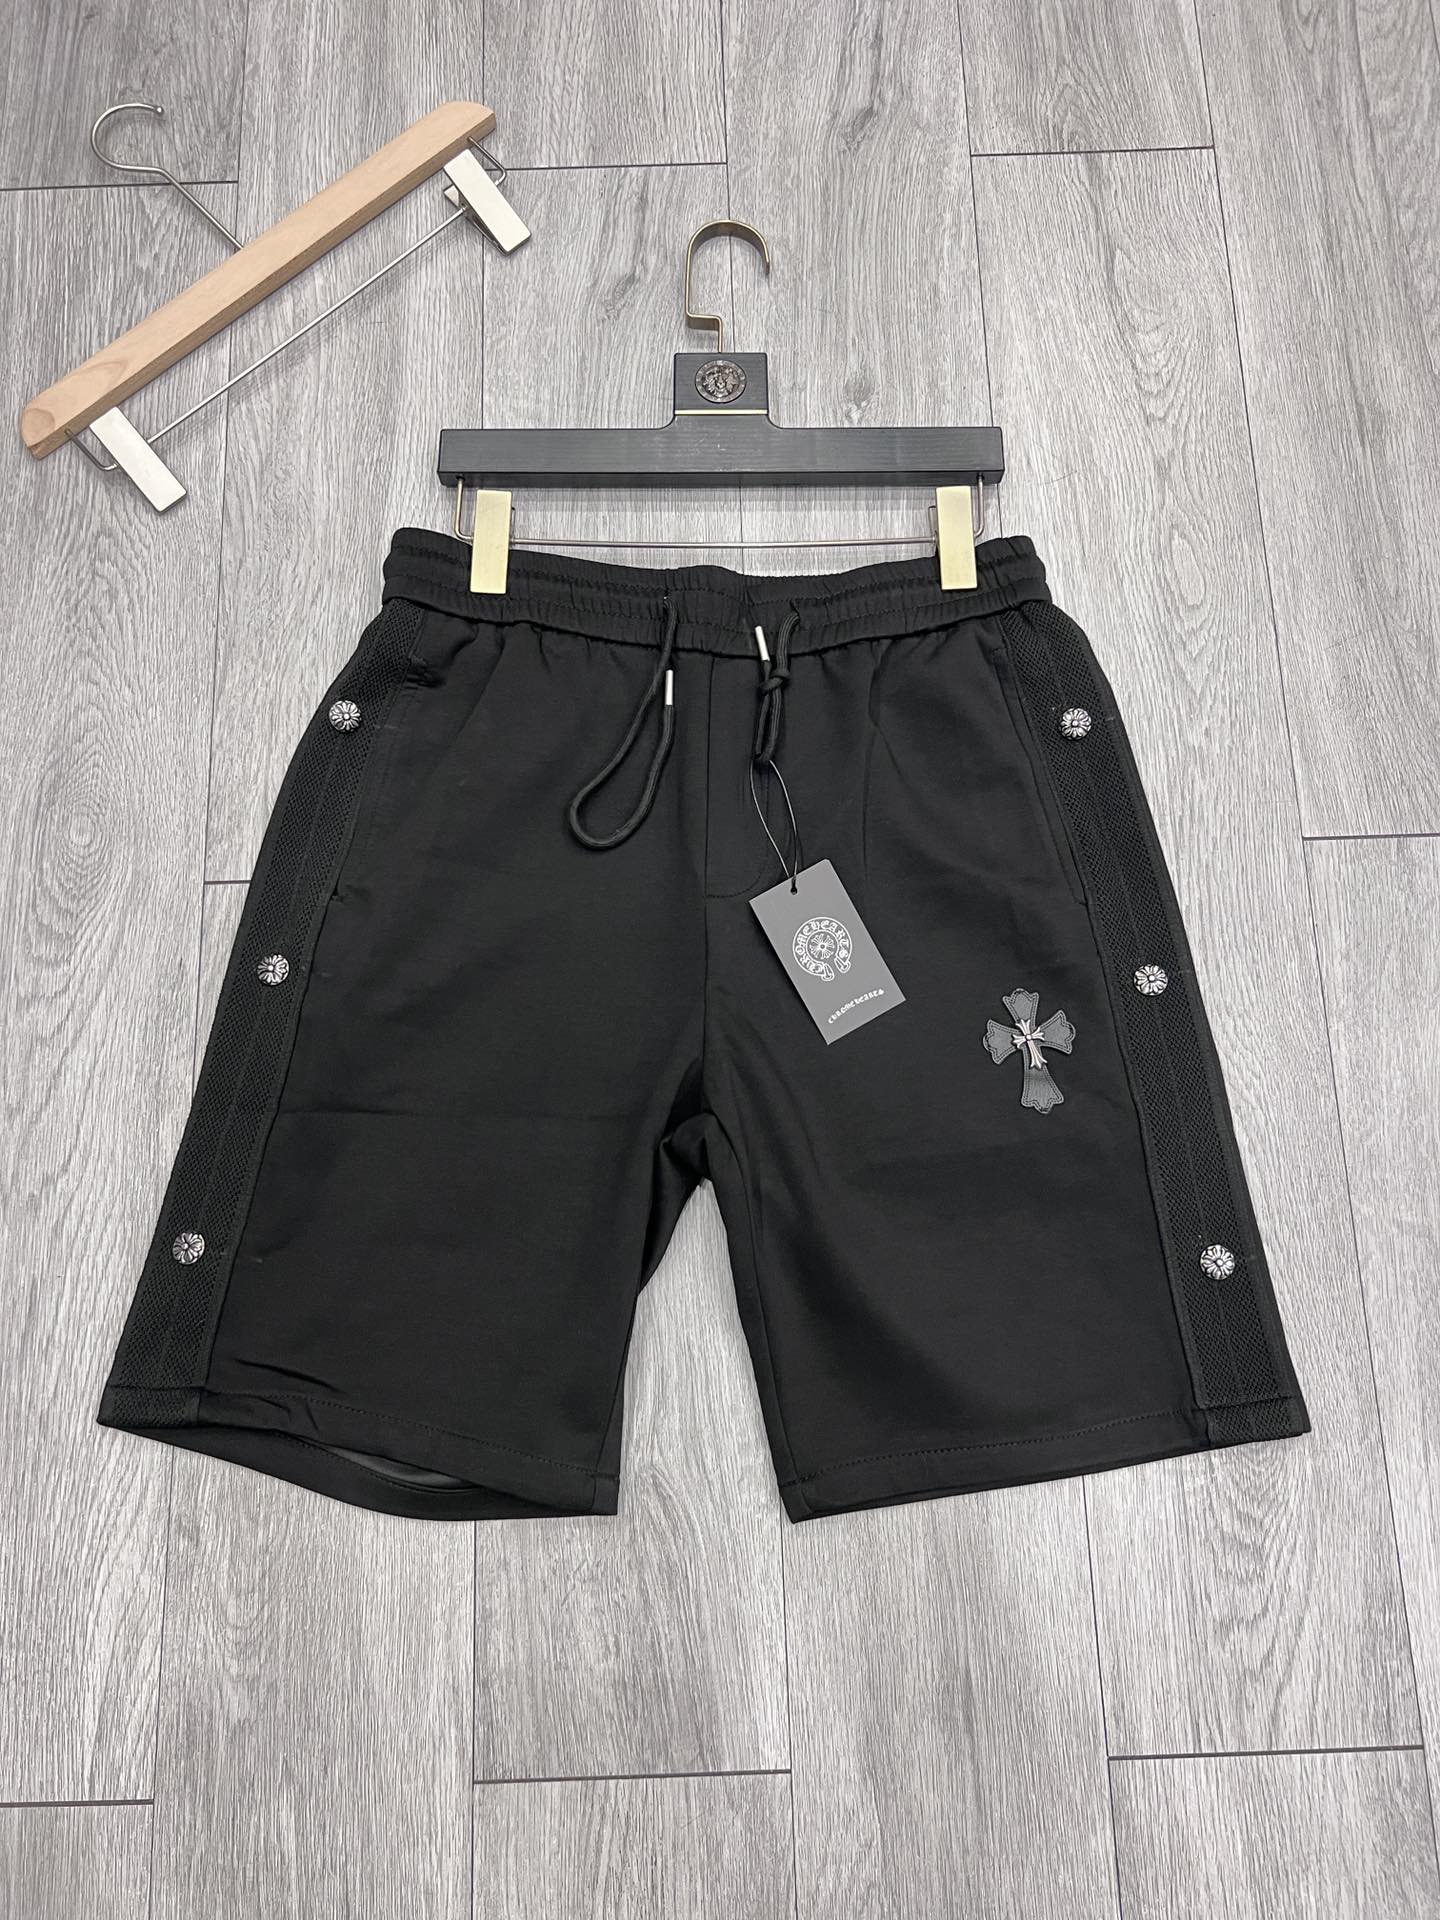 Chrome Hearts Fake
 Clothing Shorts Black Printing Summer Collection Casual